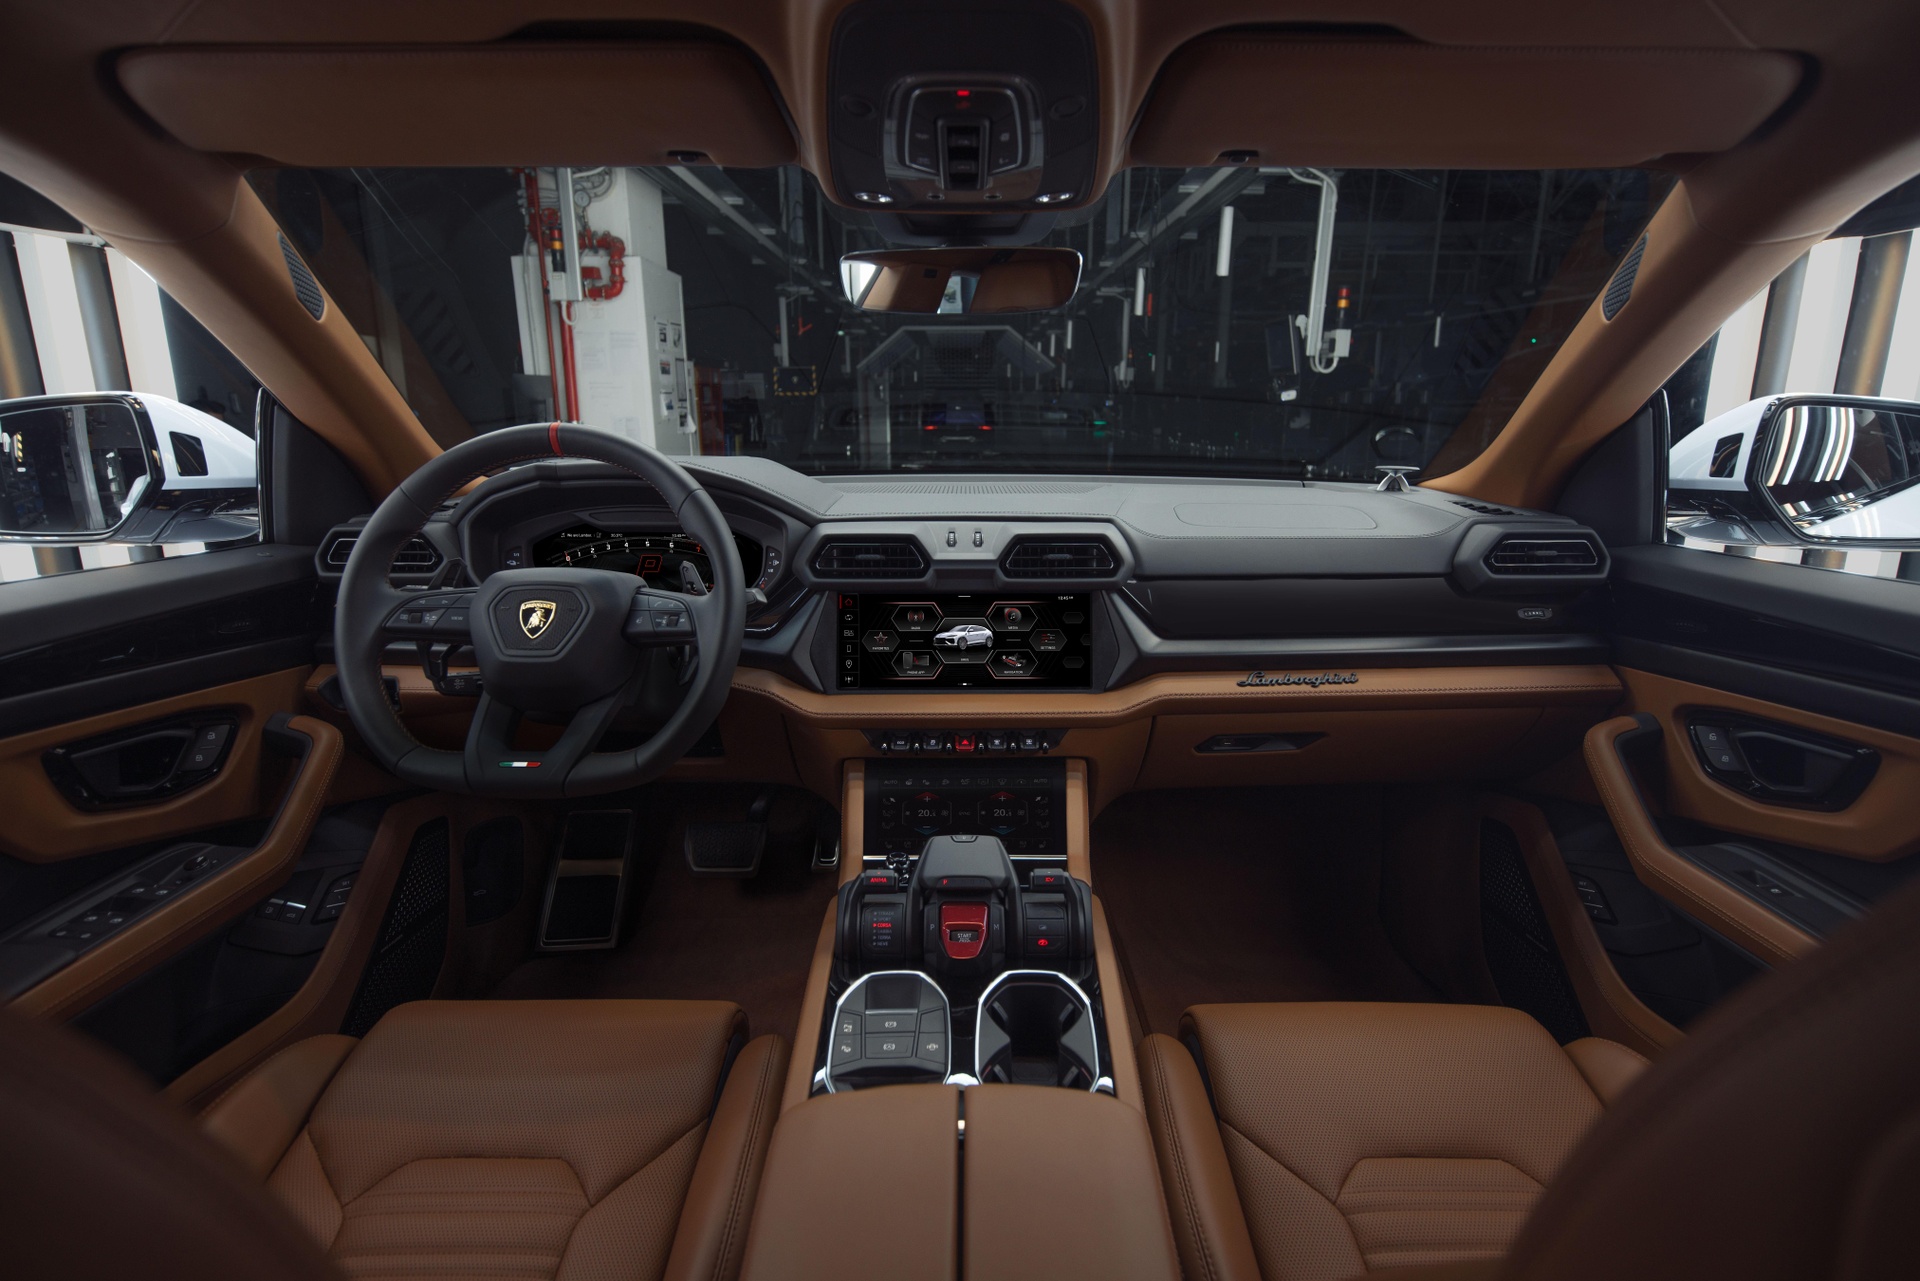 Chi tiết Lamborghini Urus SE - siêu SUV hybrid mạnh 800 mã lực